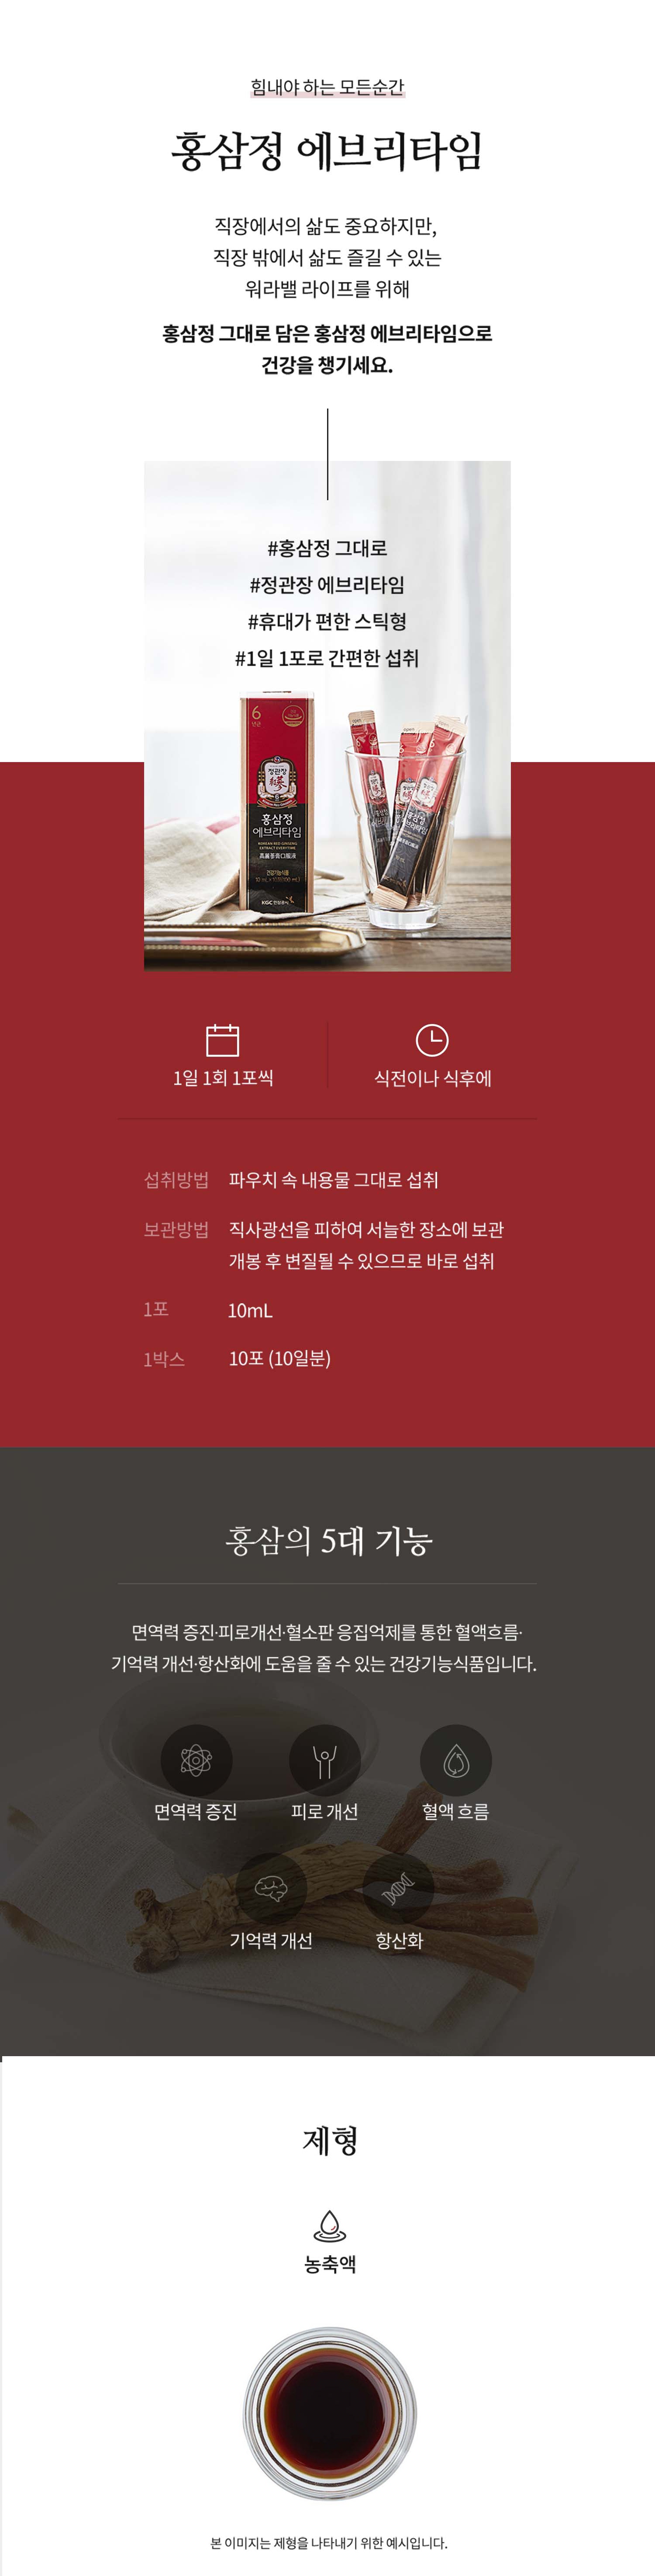 Extrait de ginseng rouge Everytime (10ml*10) [Cheongkwanjang]